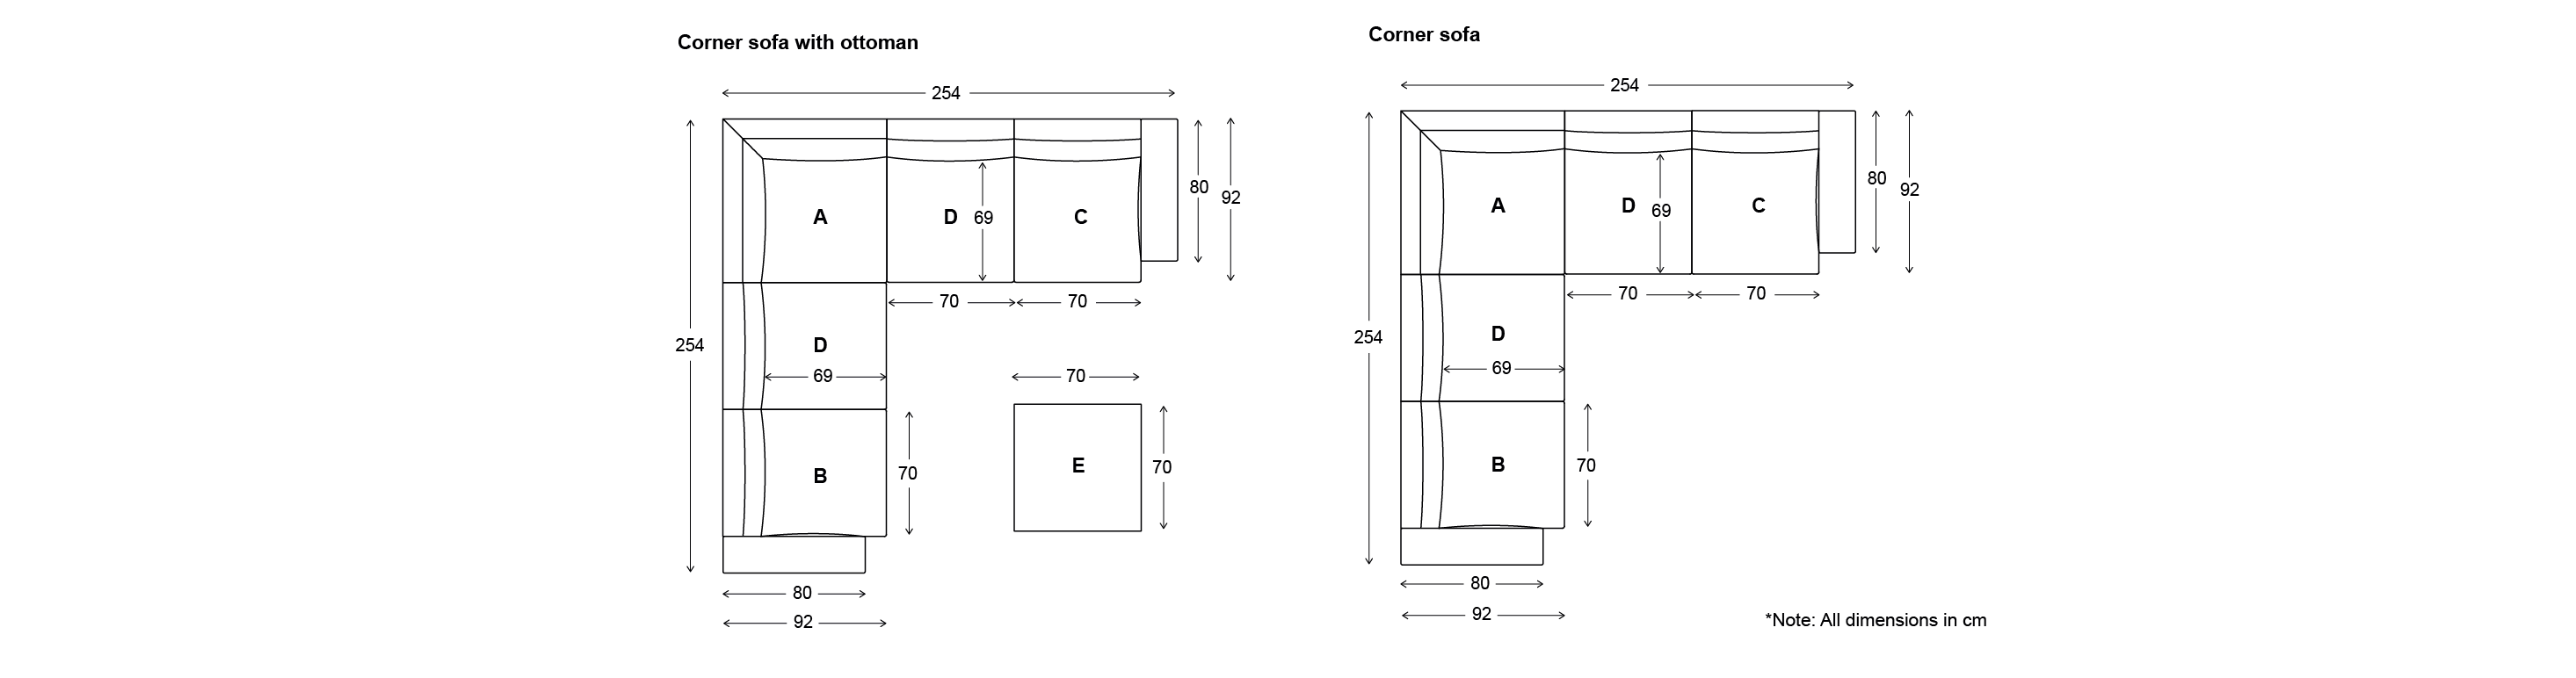 mocular corner sofa dimensions